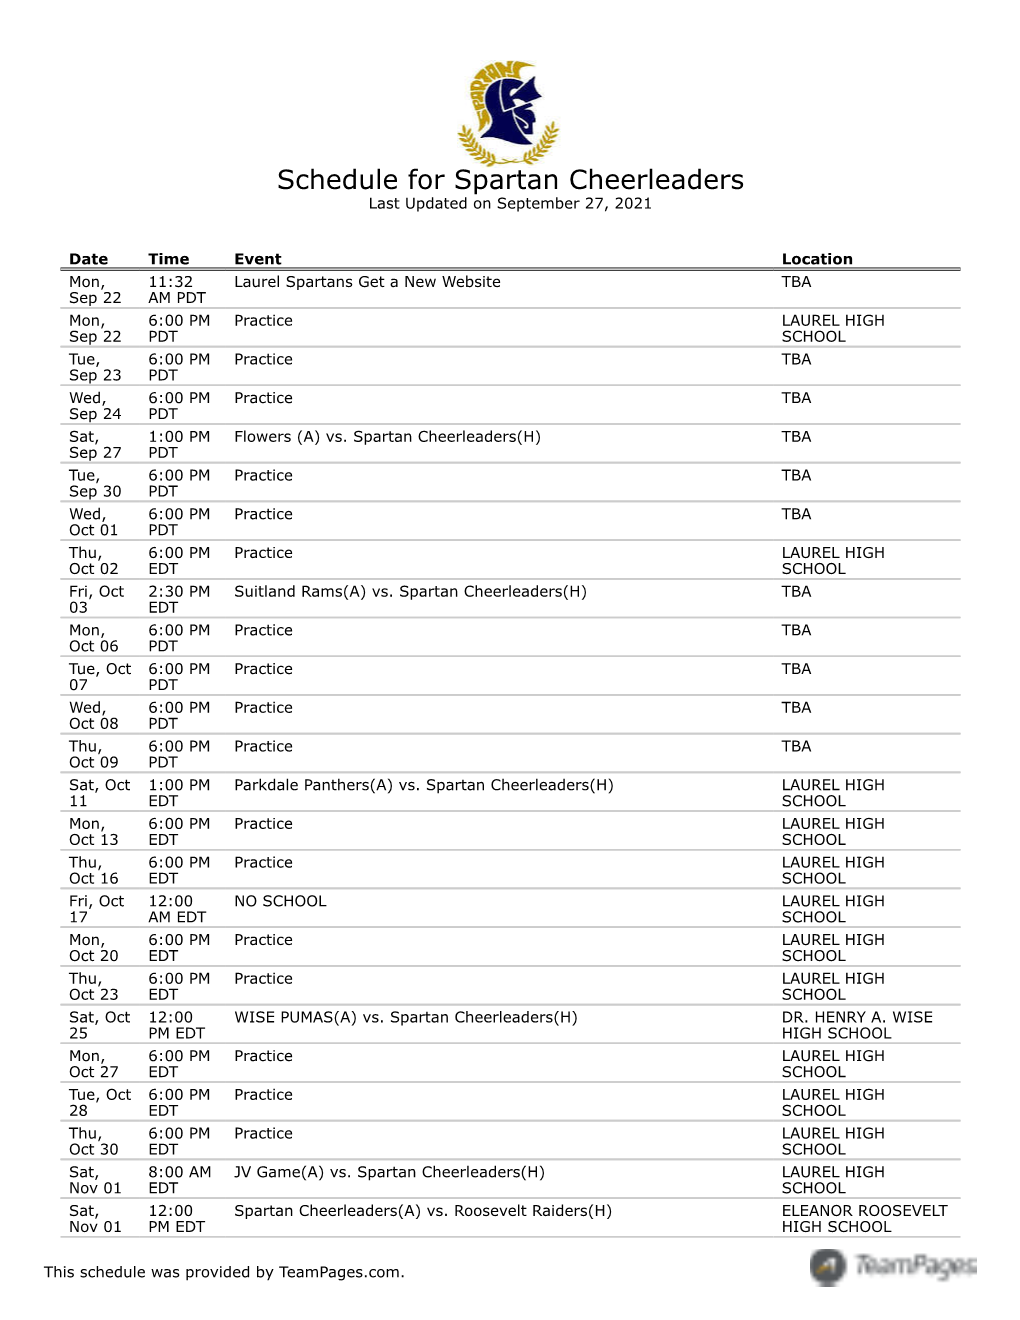 Schedule for Spartan Cheerleaders Last Updated on September 27, 2021